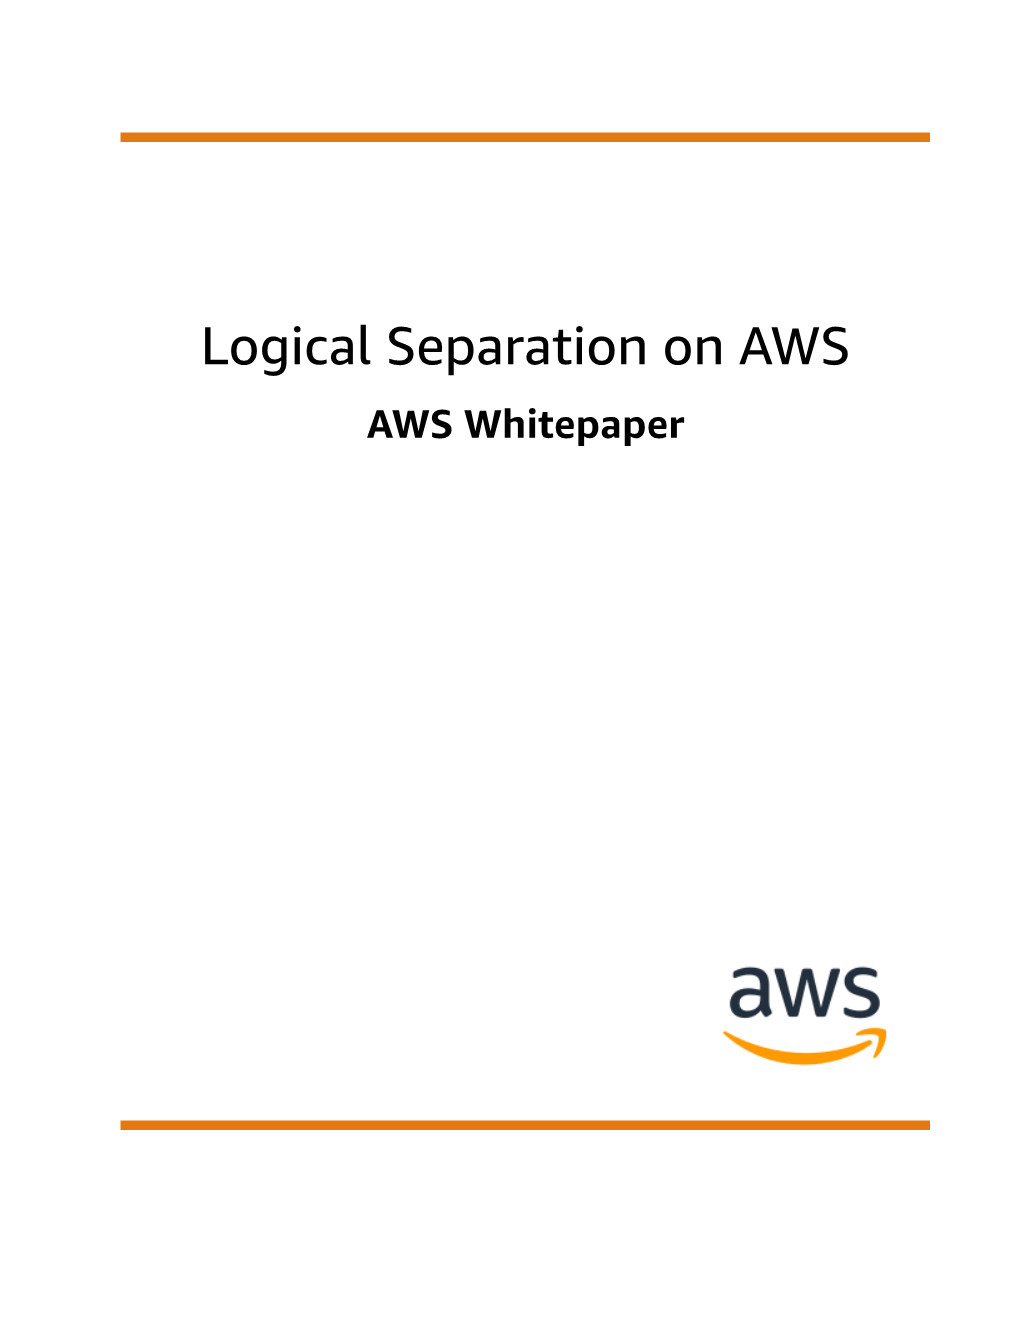 Logical Separation on AWS AWS Whitepaper Logical Separation on AWS AWS Whitepaper